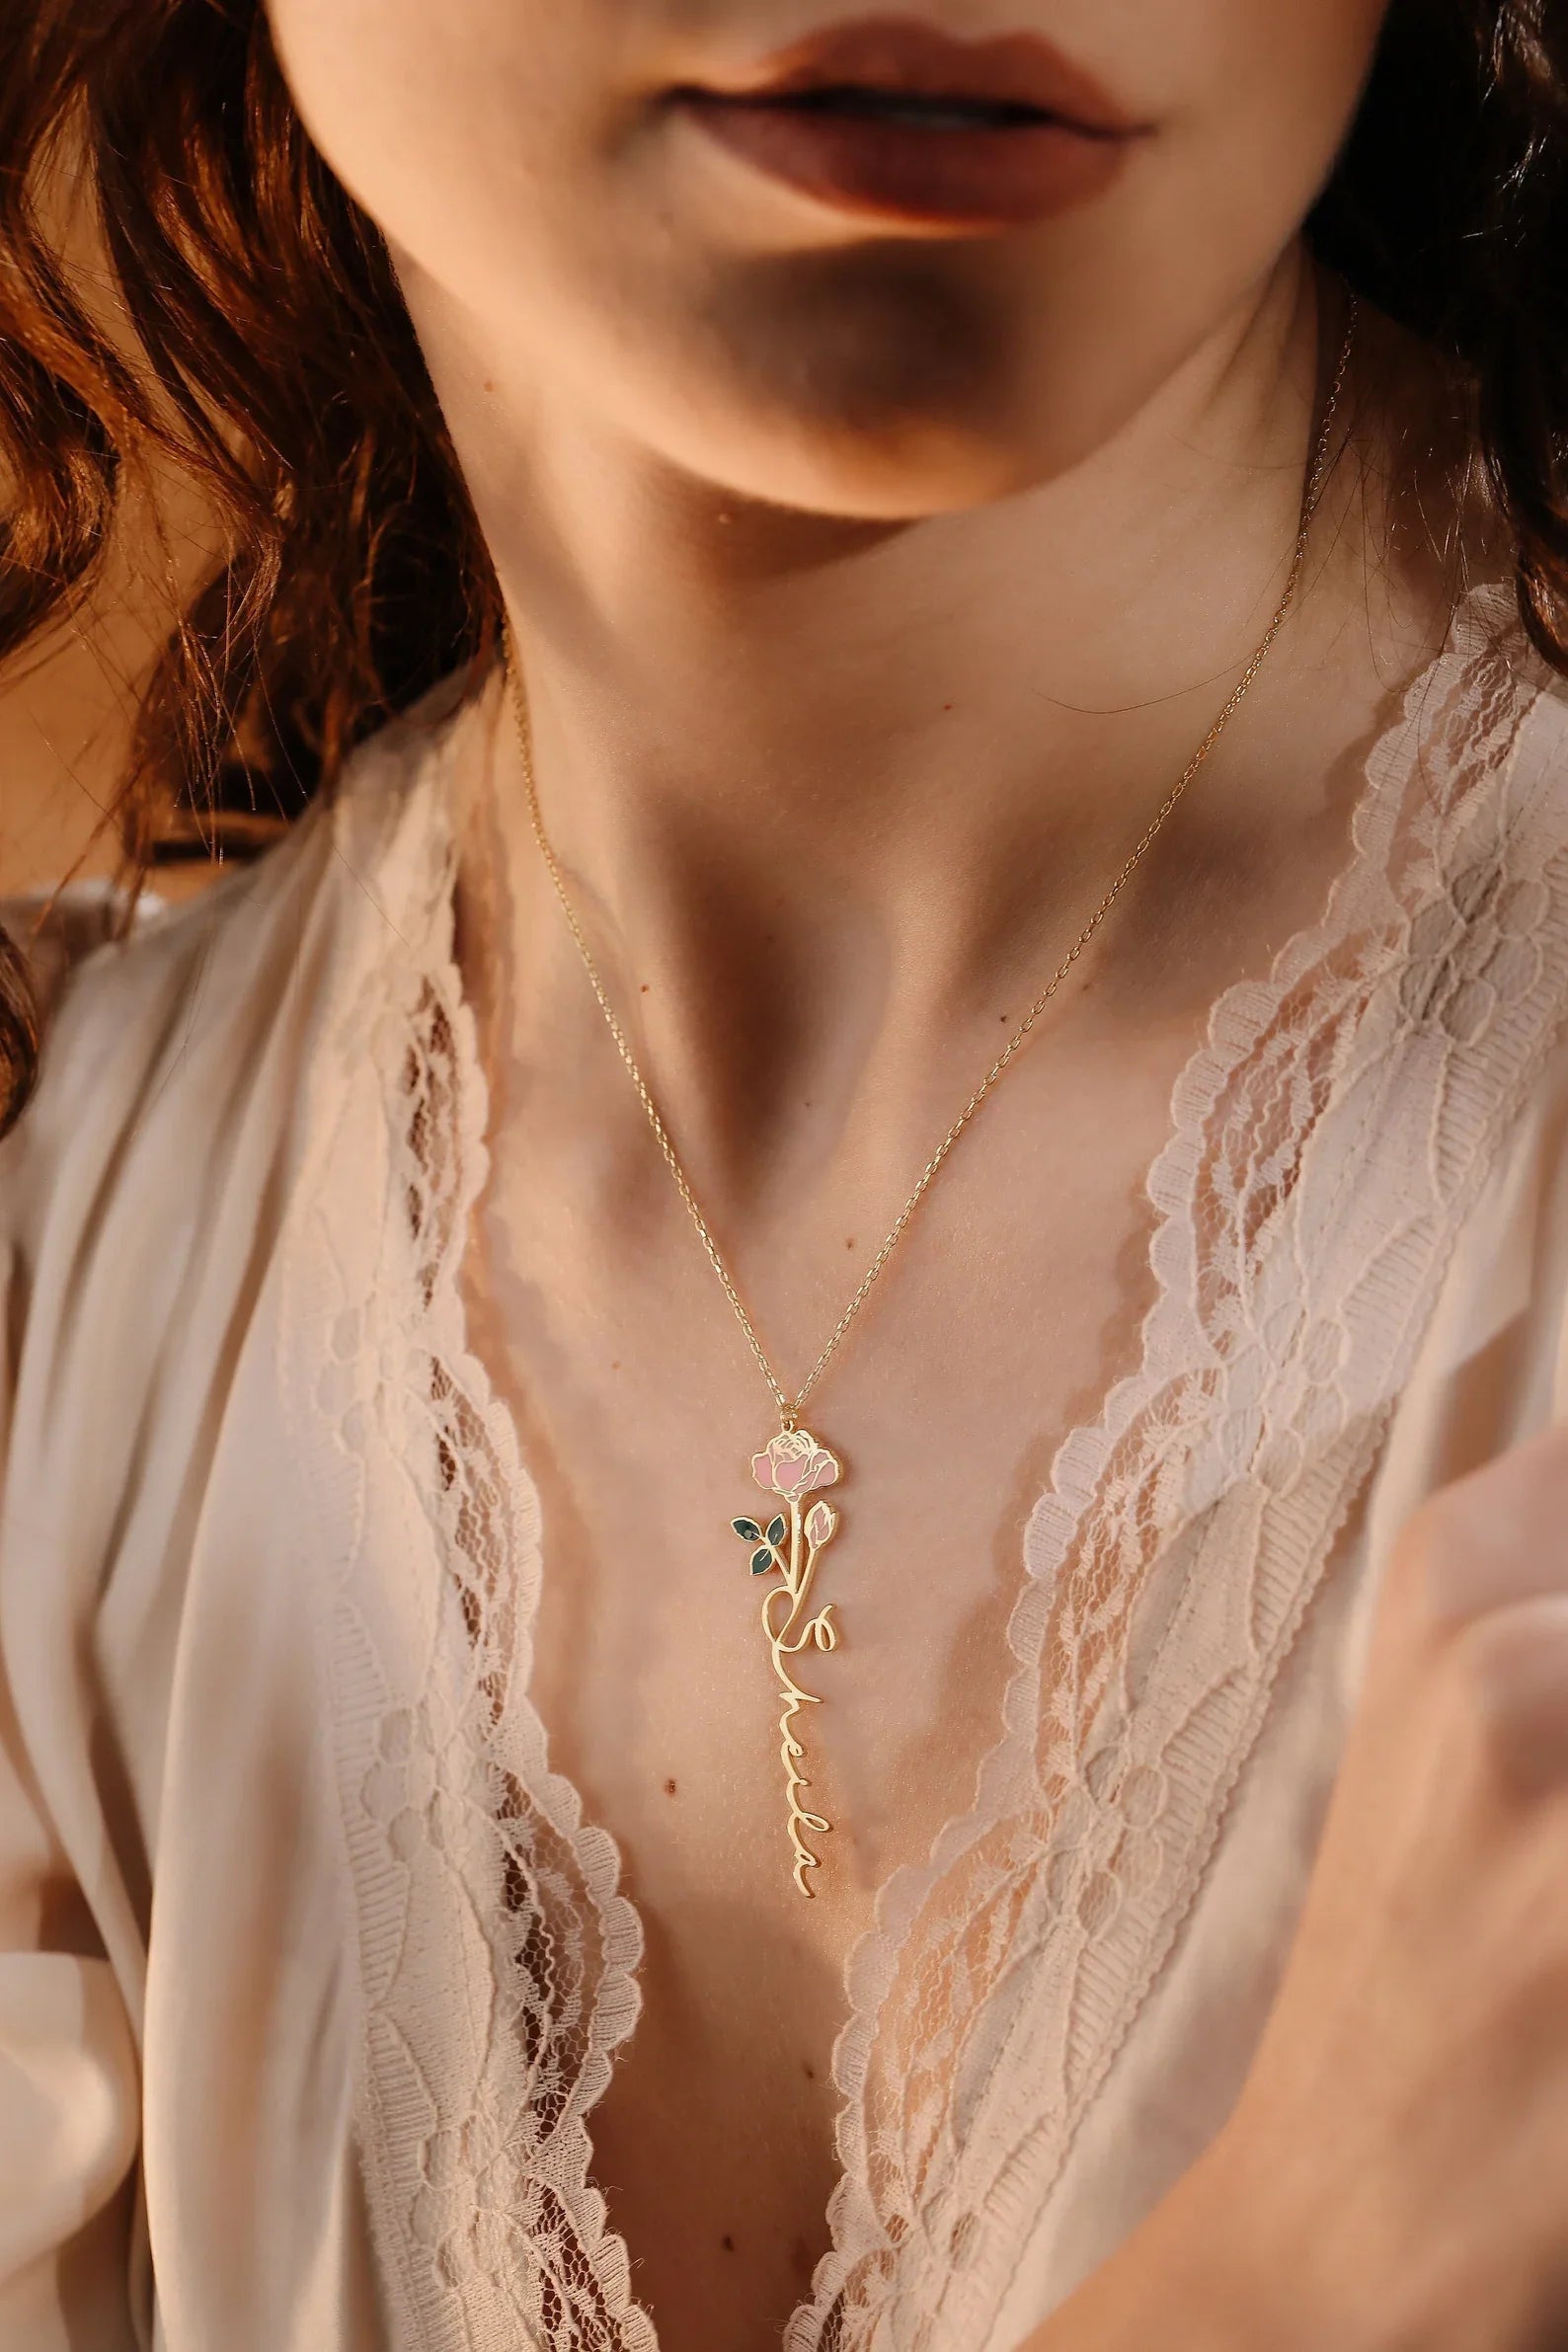 Women's Custom Name Plate Script Necklace | The Gold Goddess